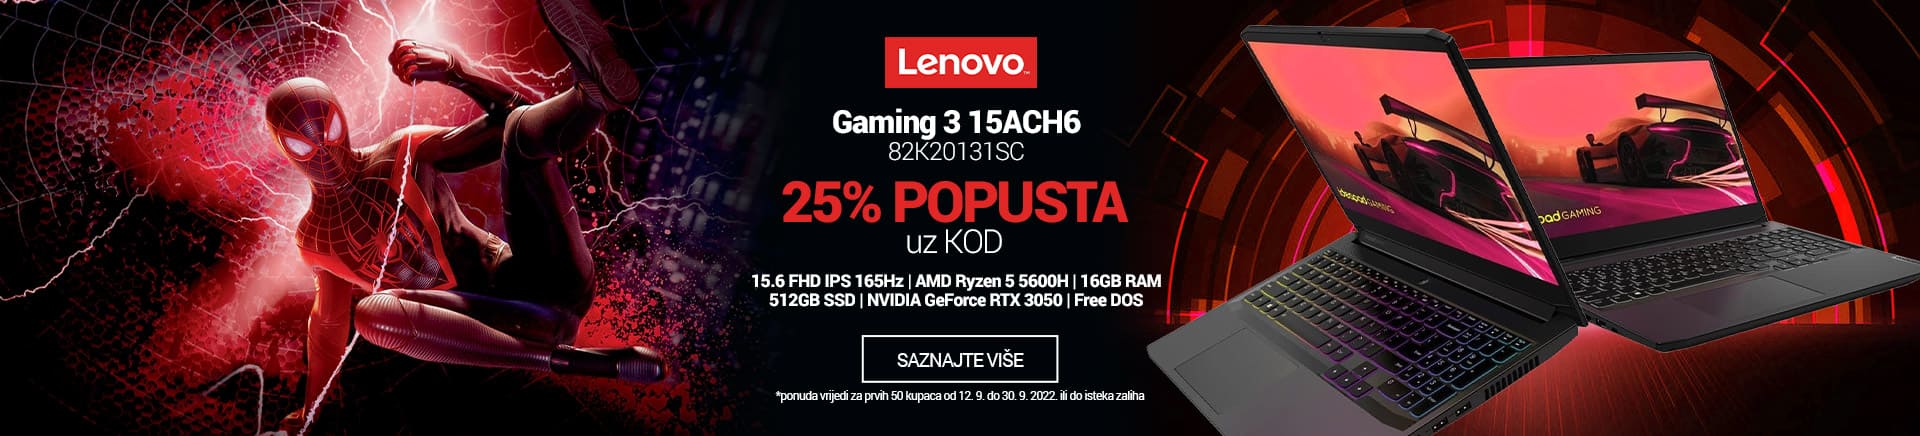 Lenovo Gaming 3 15ACH5  do 25% popusta uz kod